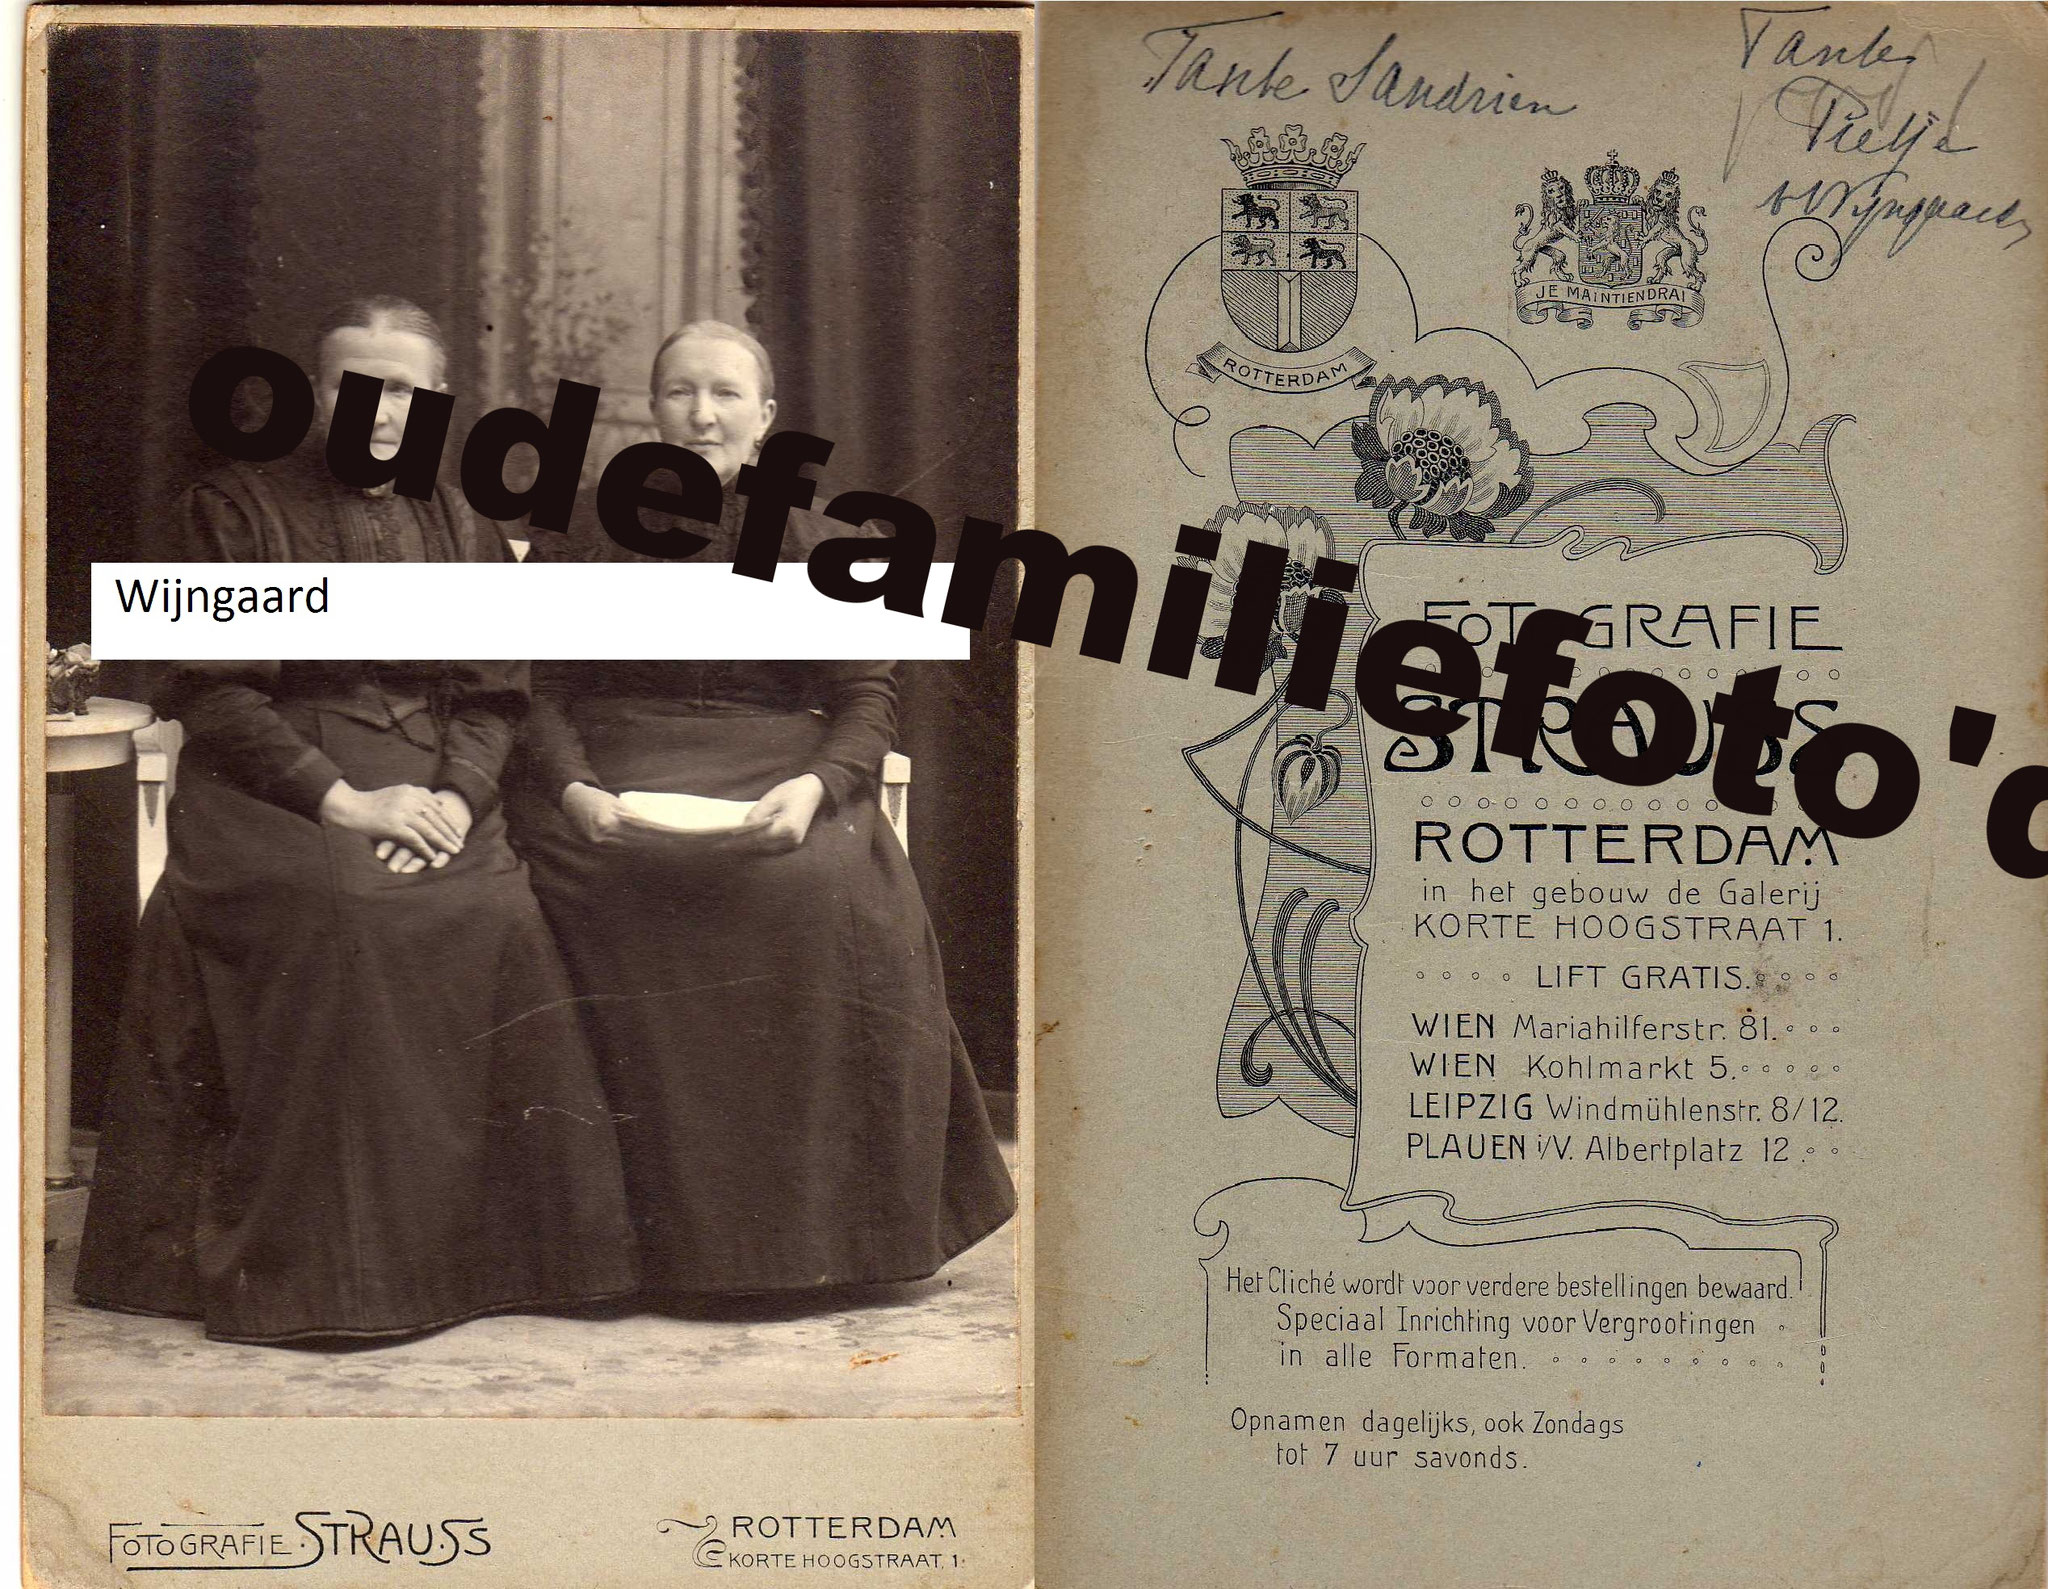 Wijngaard, Pieternella Hendrietta 90& geb:20-05-1804 Rotterdam. getrouwd met Jan Amersfoort. € 4,00